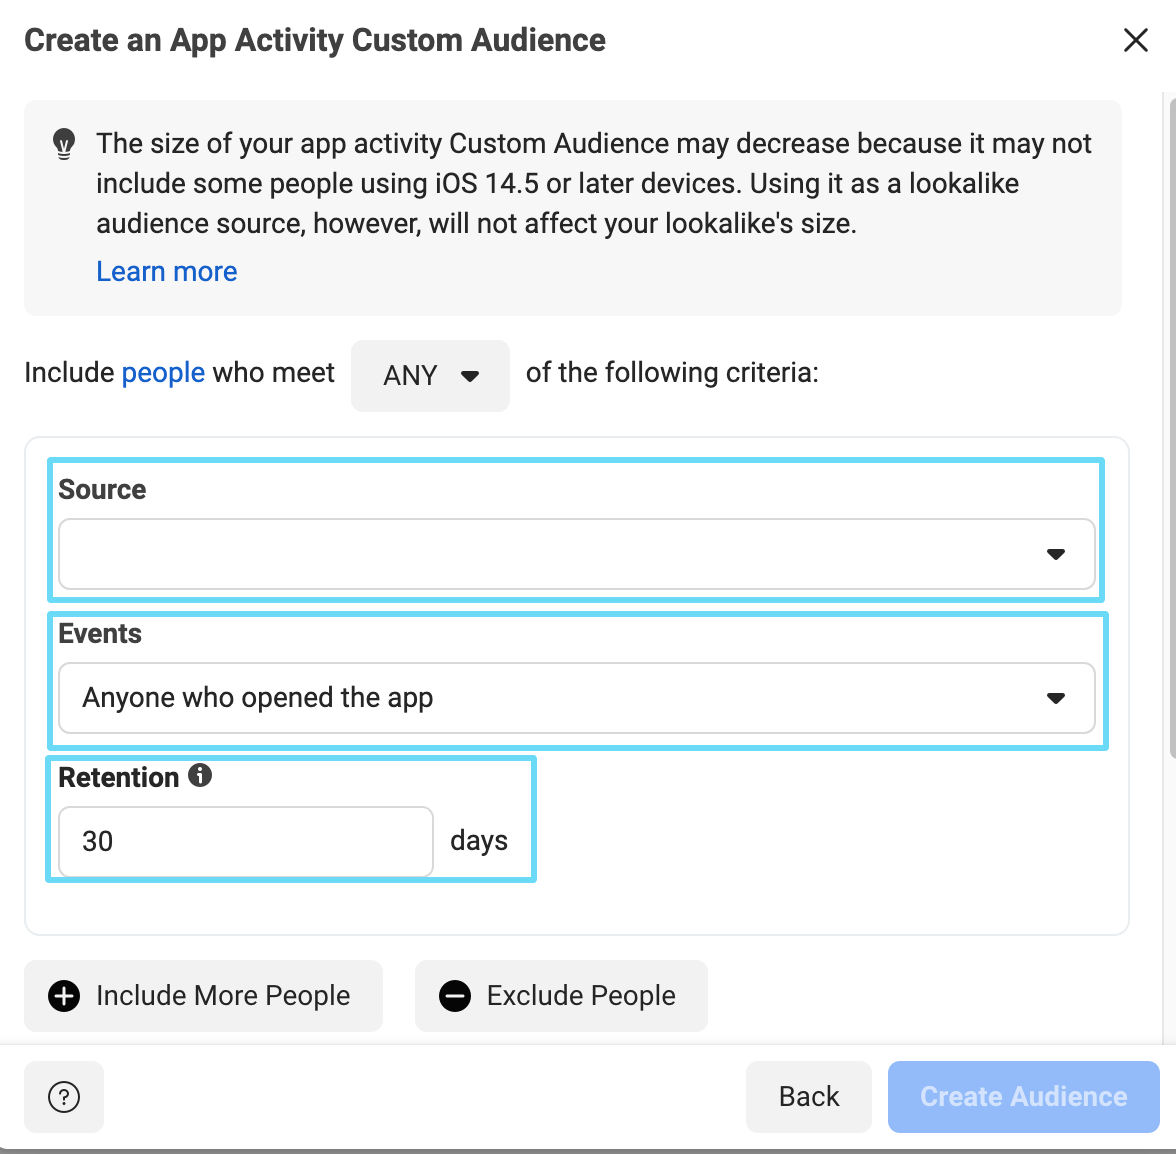 Facebook Ads Manager app activity custom audience setup